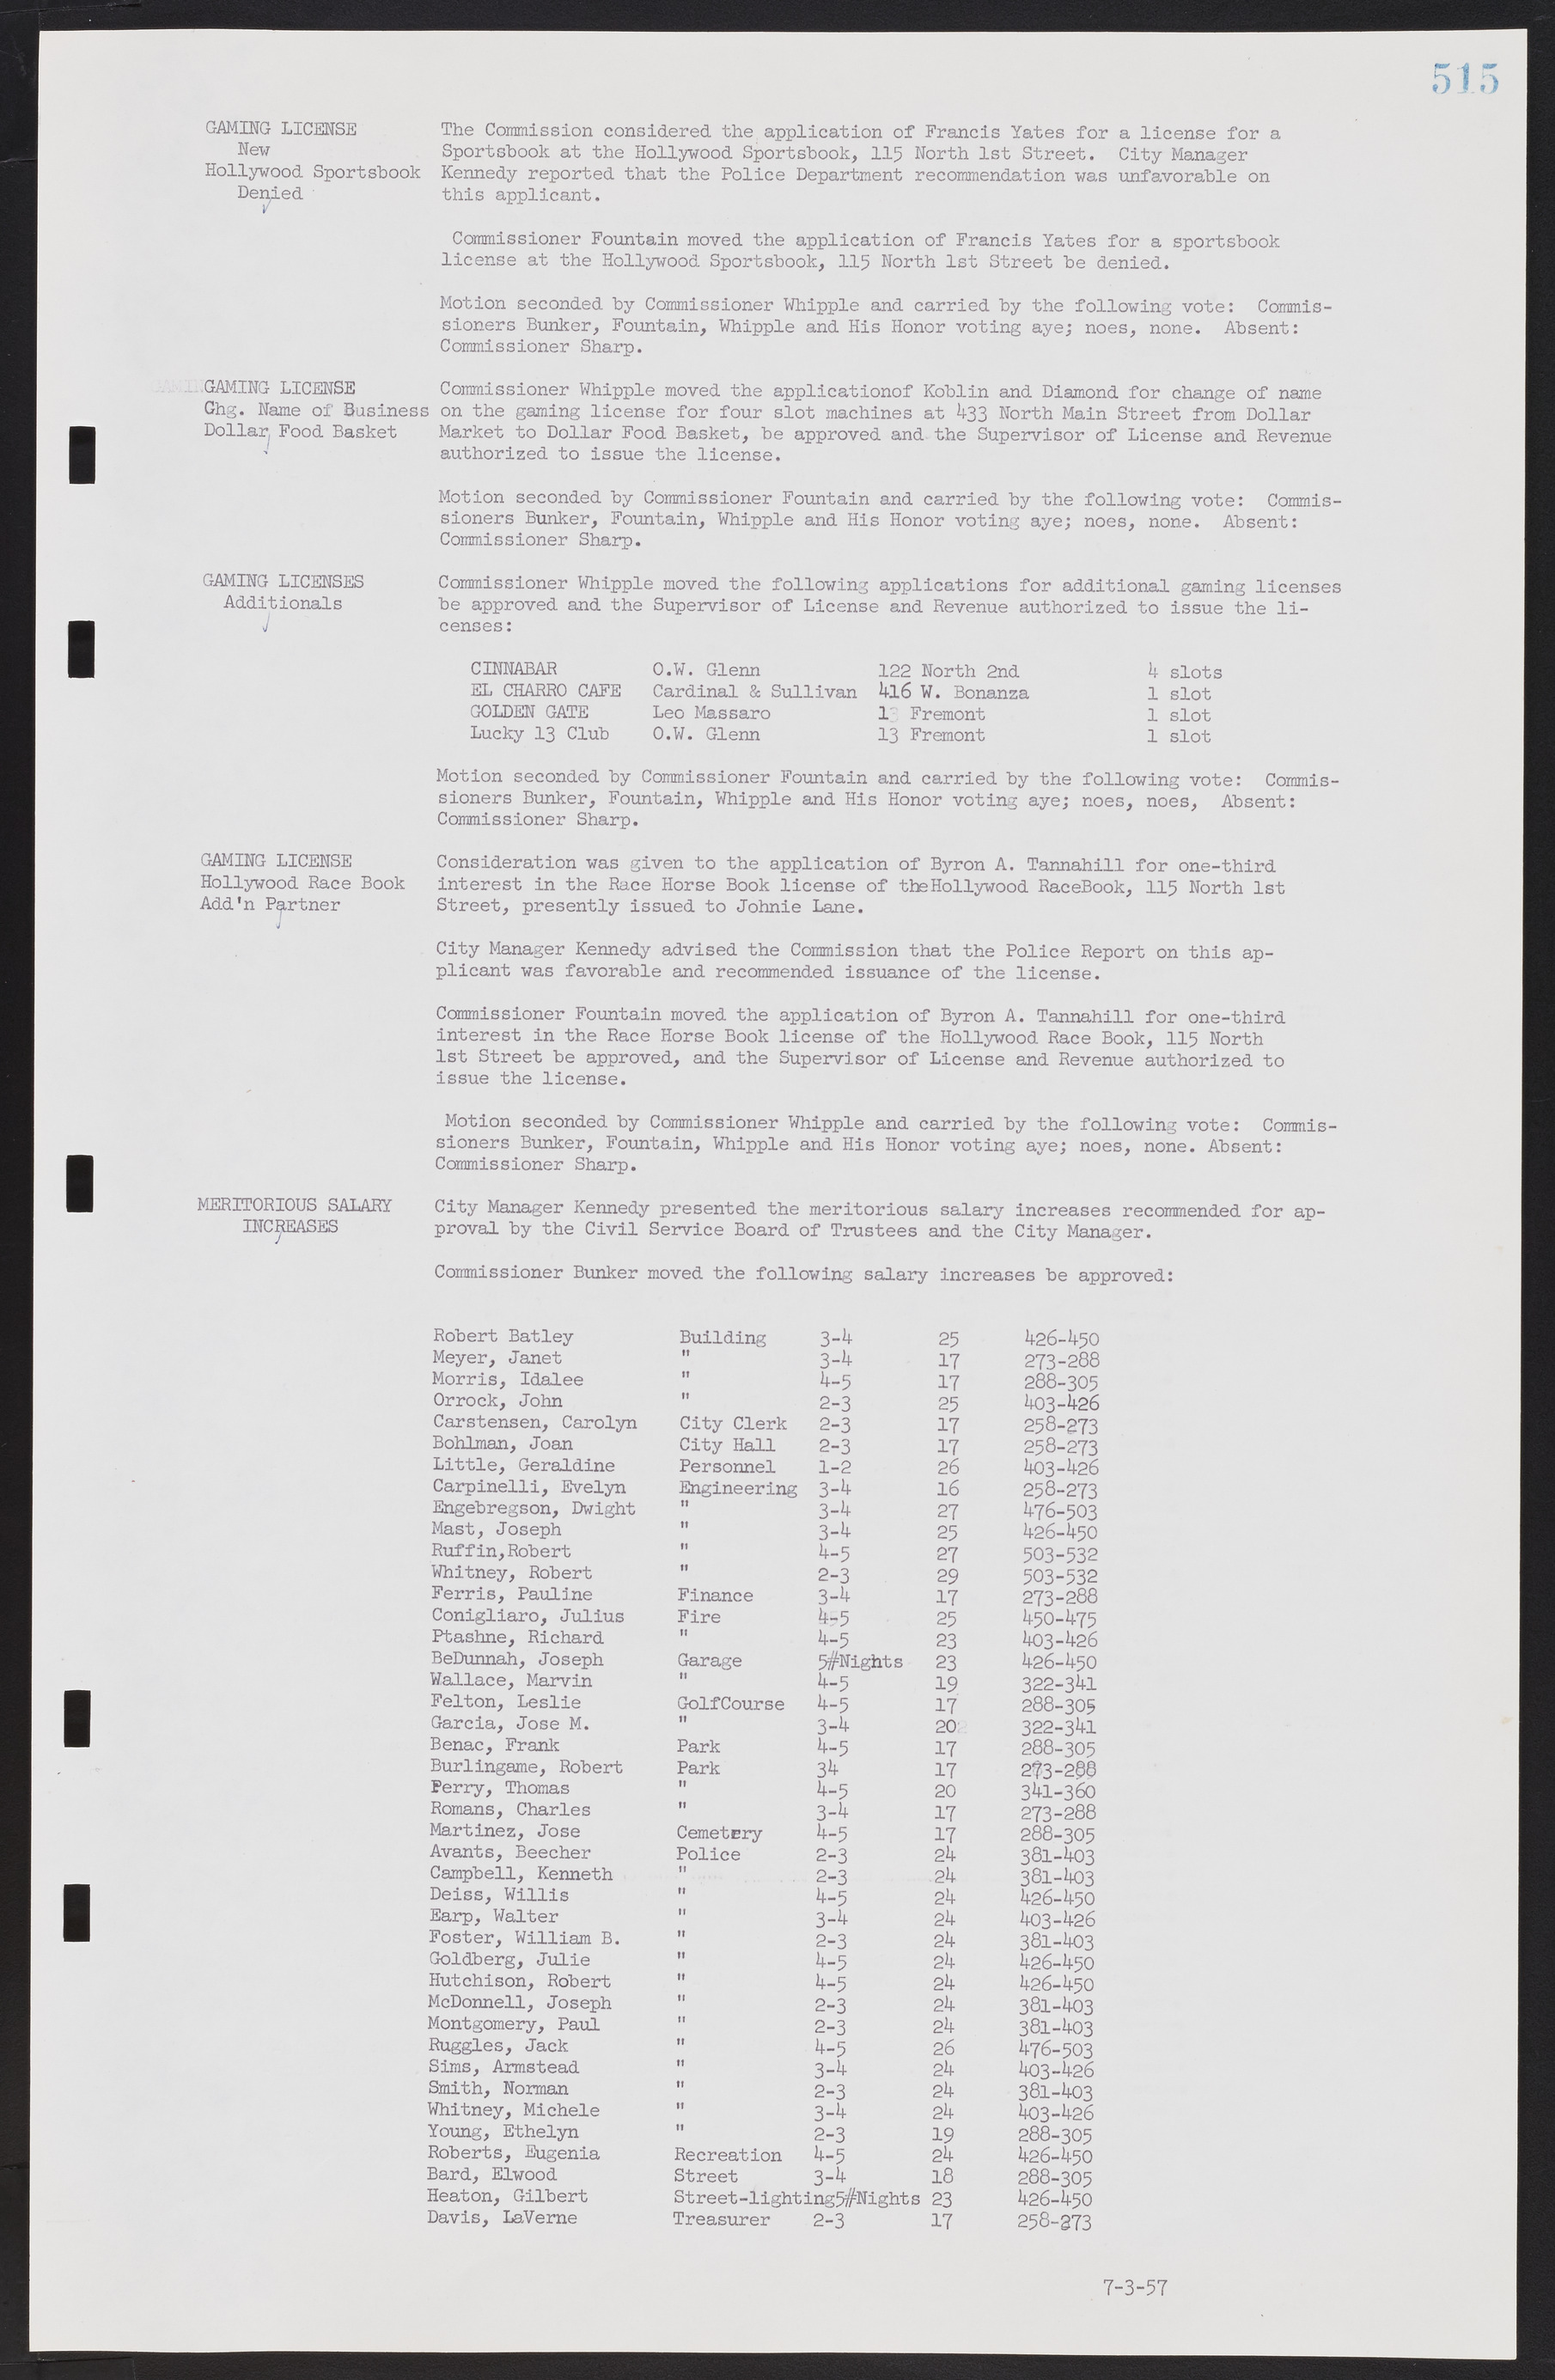 Las Vegas City Commission Minutes, September 21, 1955 to November 20, 1957, lvc000010-535